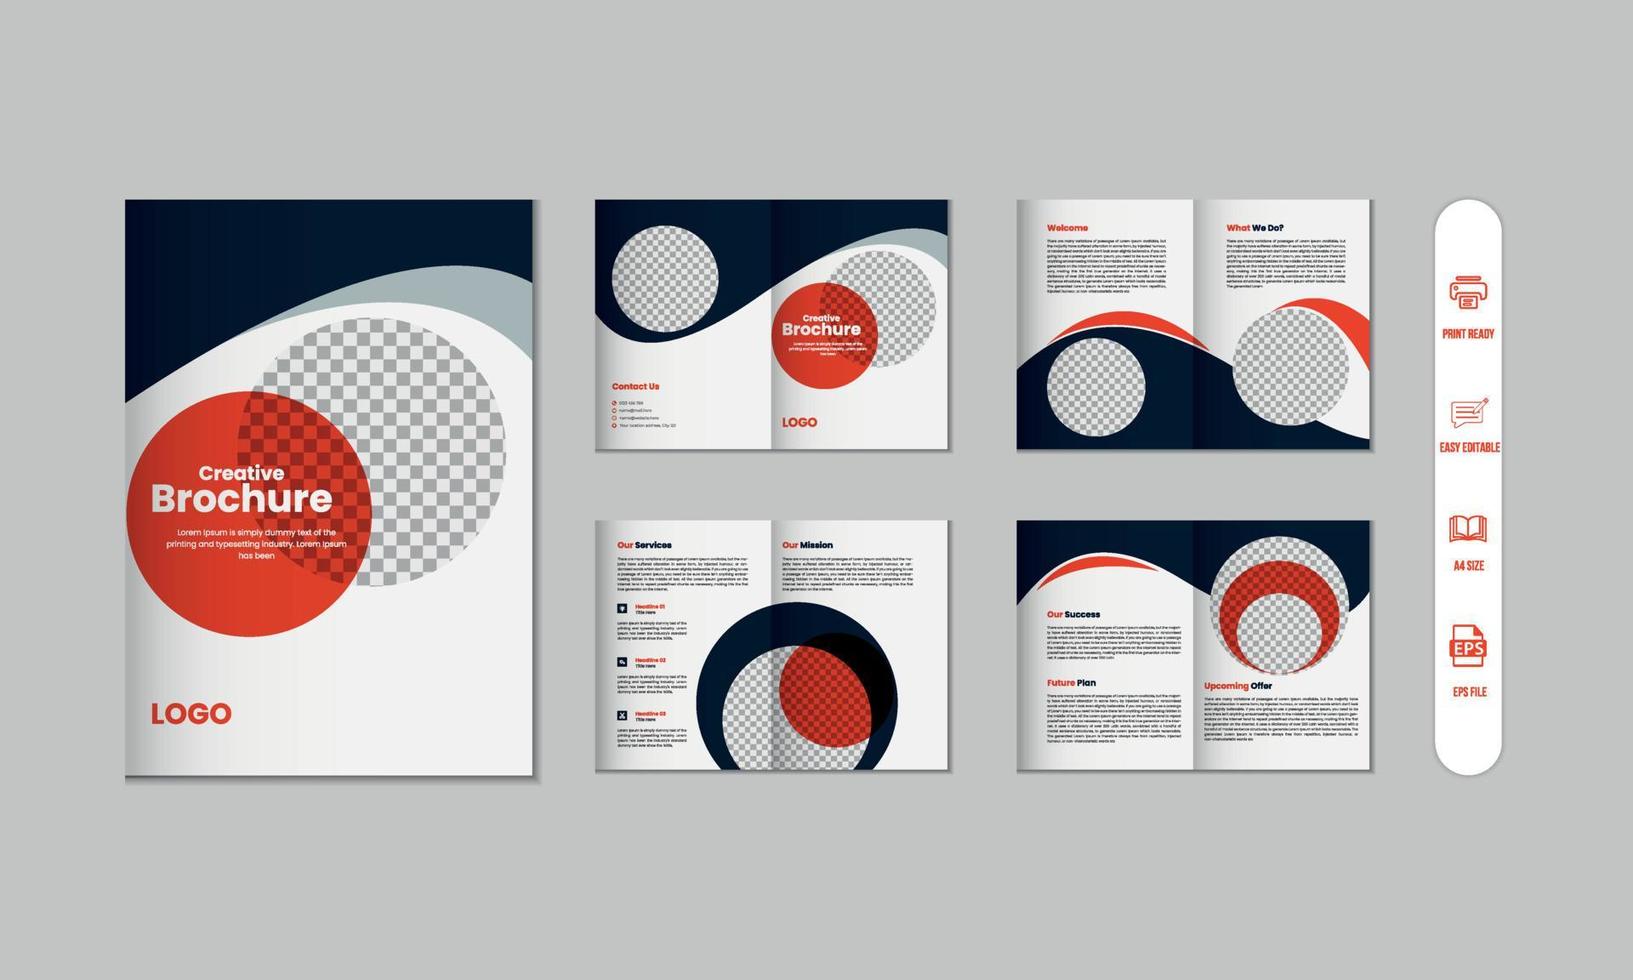 8 pages corporate modern brochure and company profile, magazine, portfolio template design vector